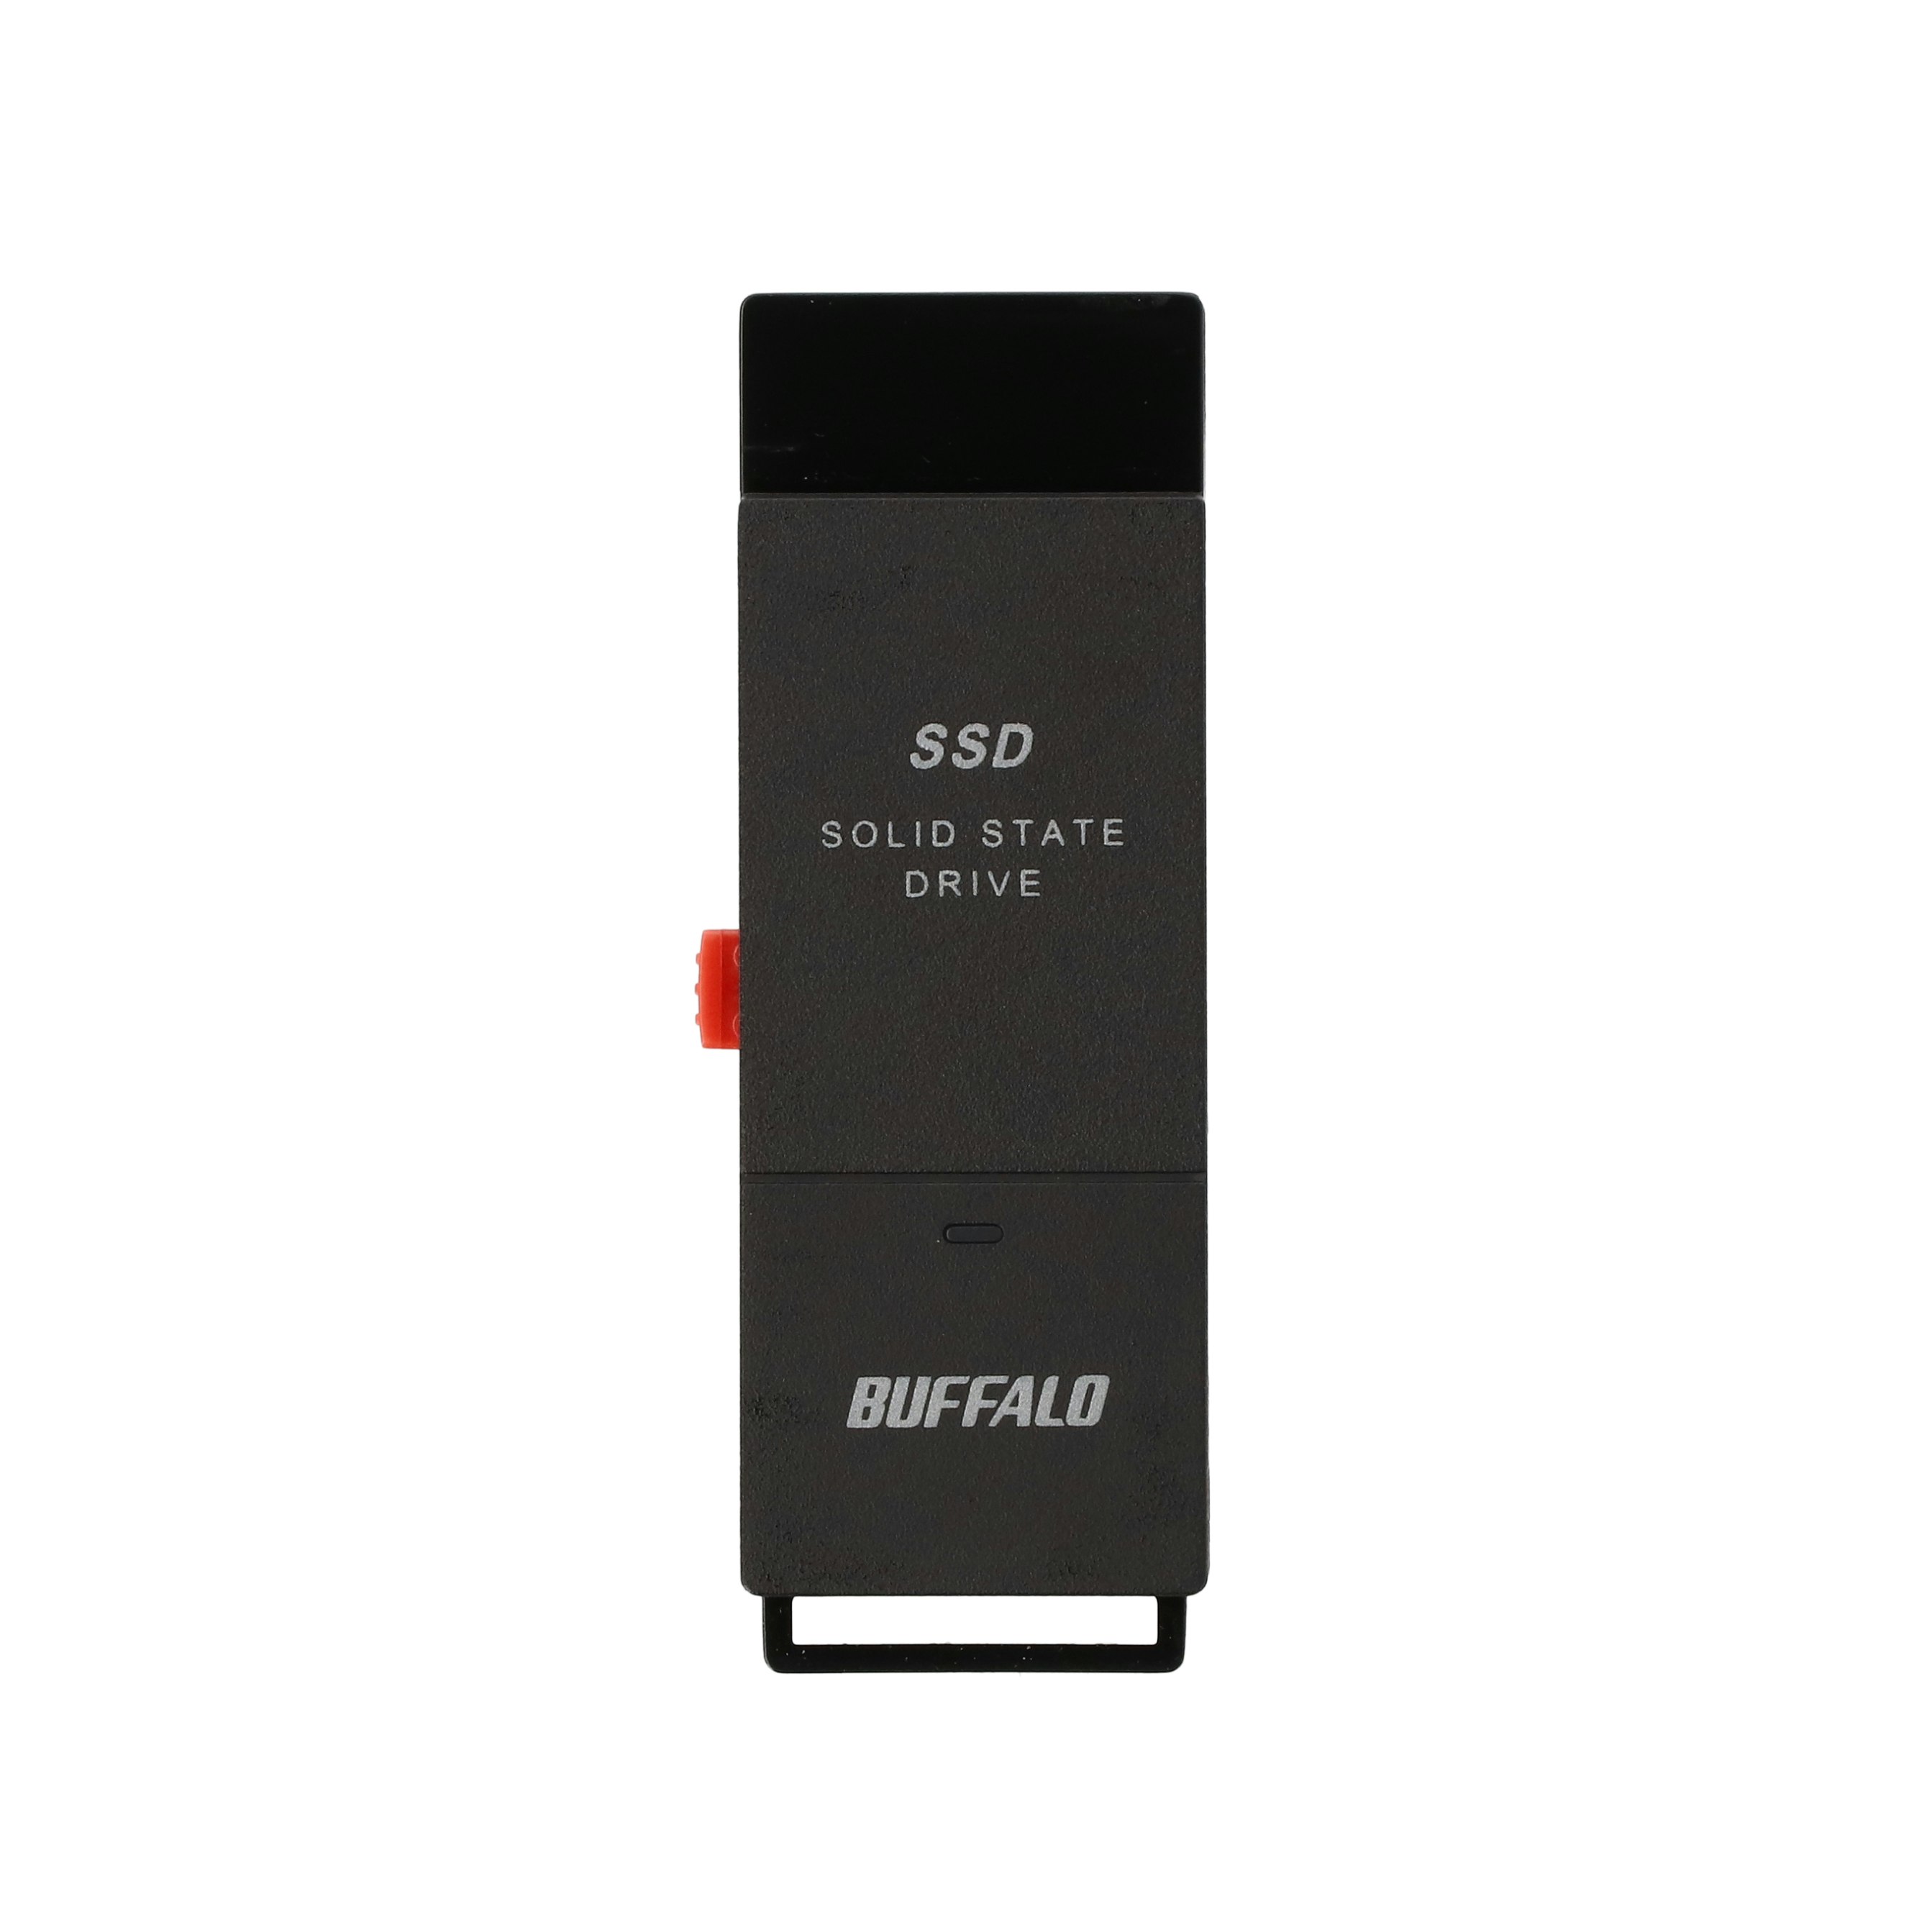 SSD-PG1.0U3-BC(ブラック) USB 3.2(Gen 1)対応 ポータブルSSD 1TB   マカフィー リブセーフ 3年 同時購入版